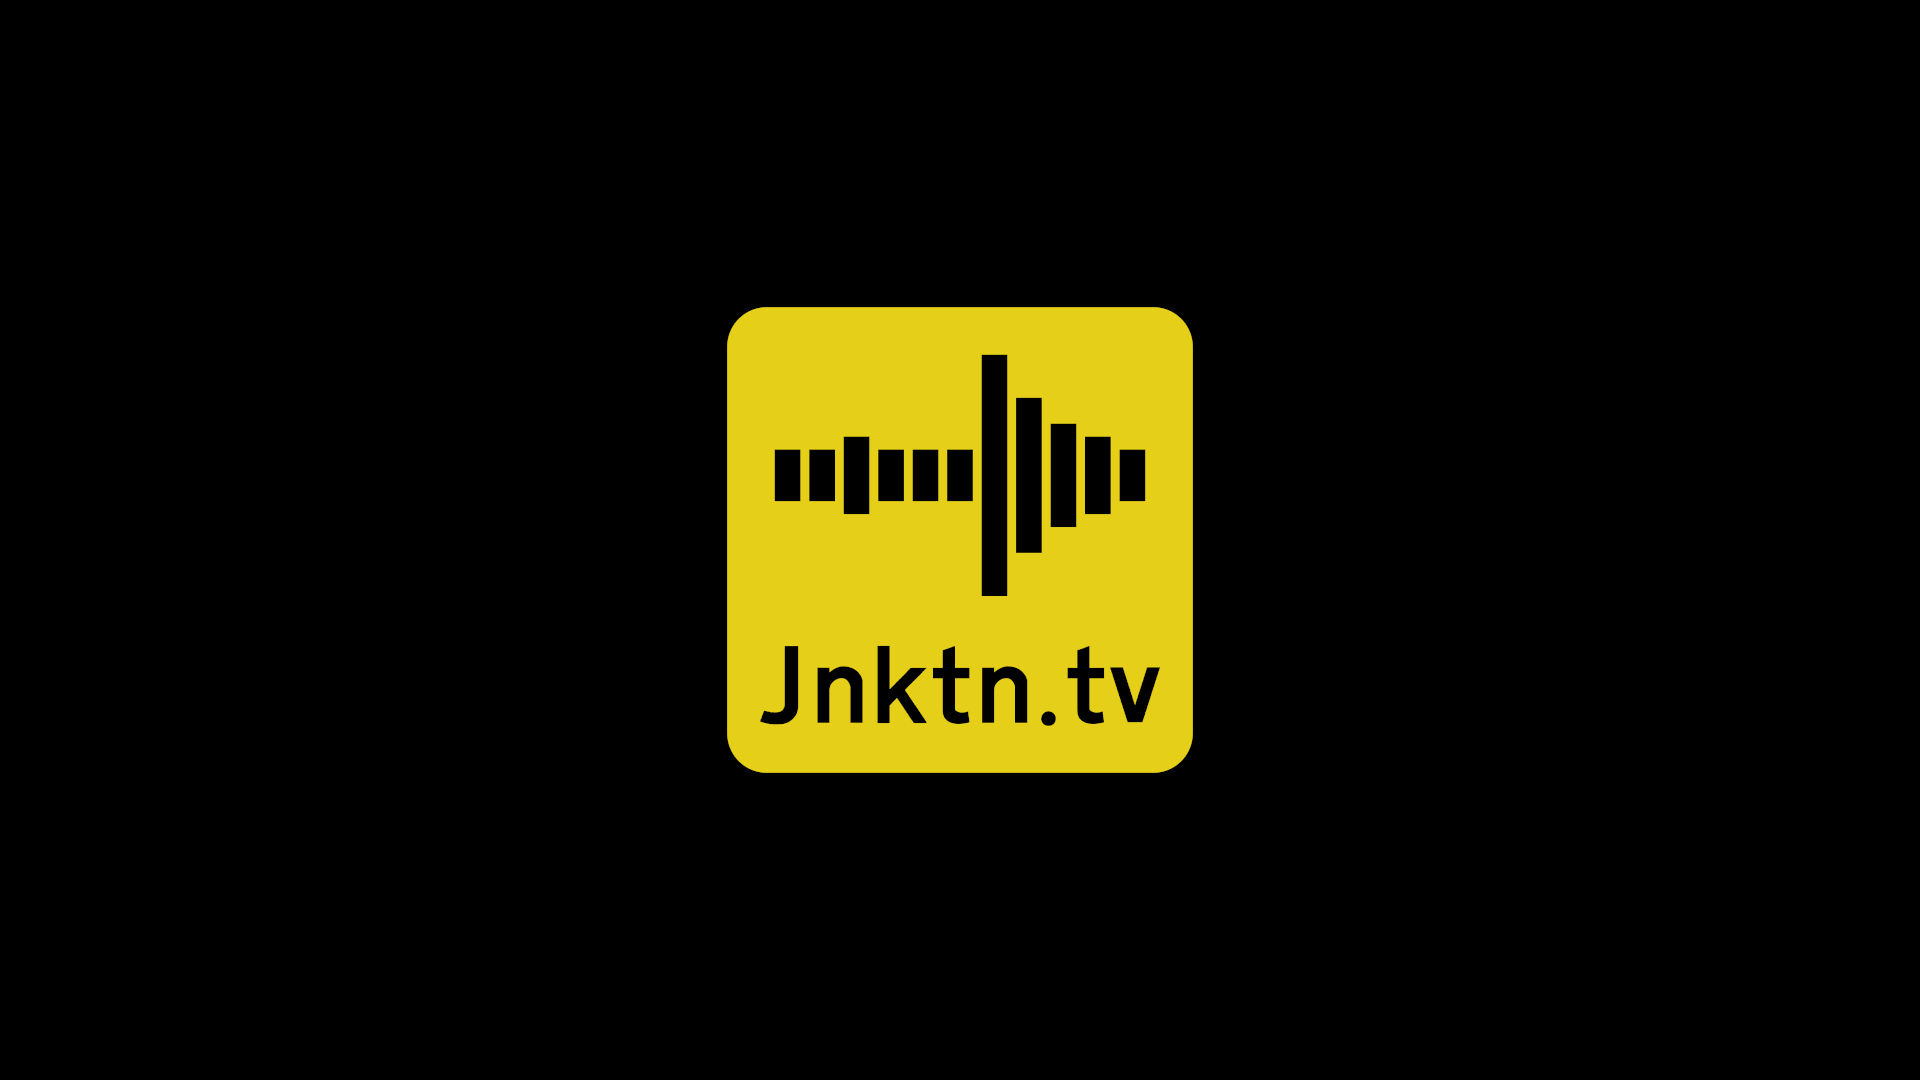 Jnktn.tv Video Placeholder Image